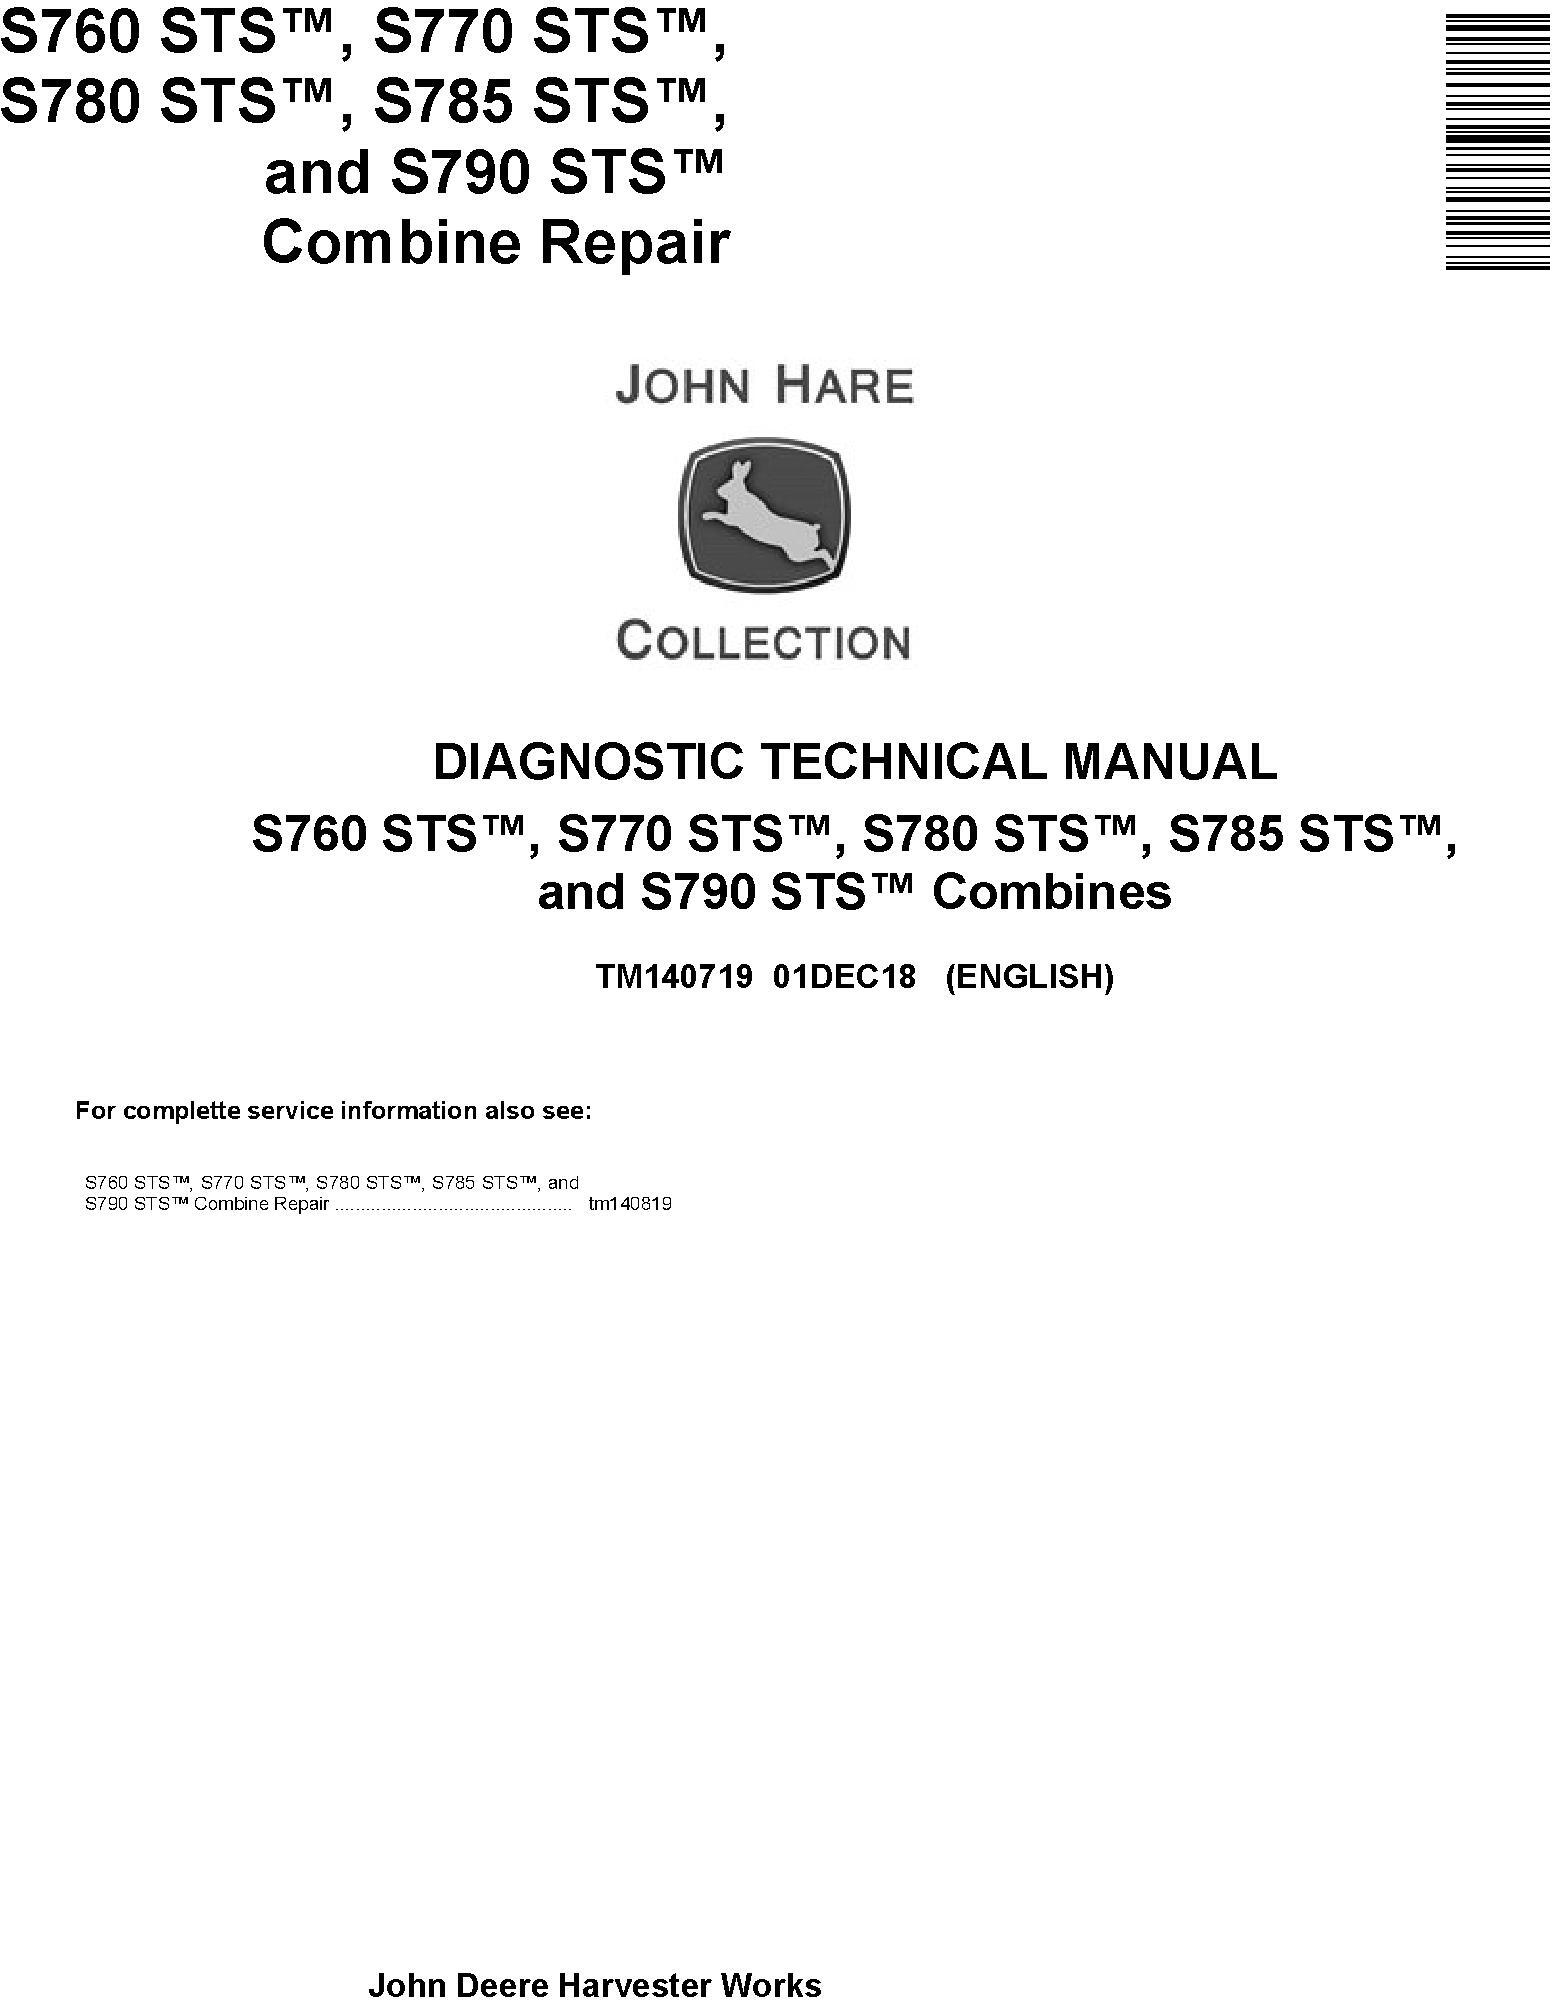 John Deere S760 to S790 STS Combine Technical Manual TM140719